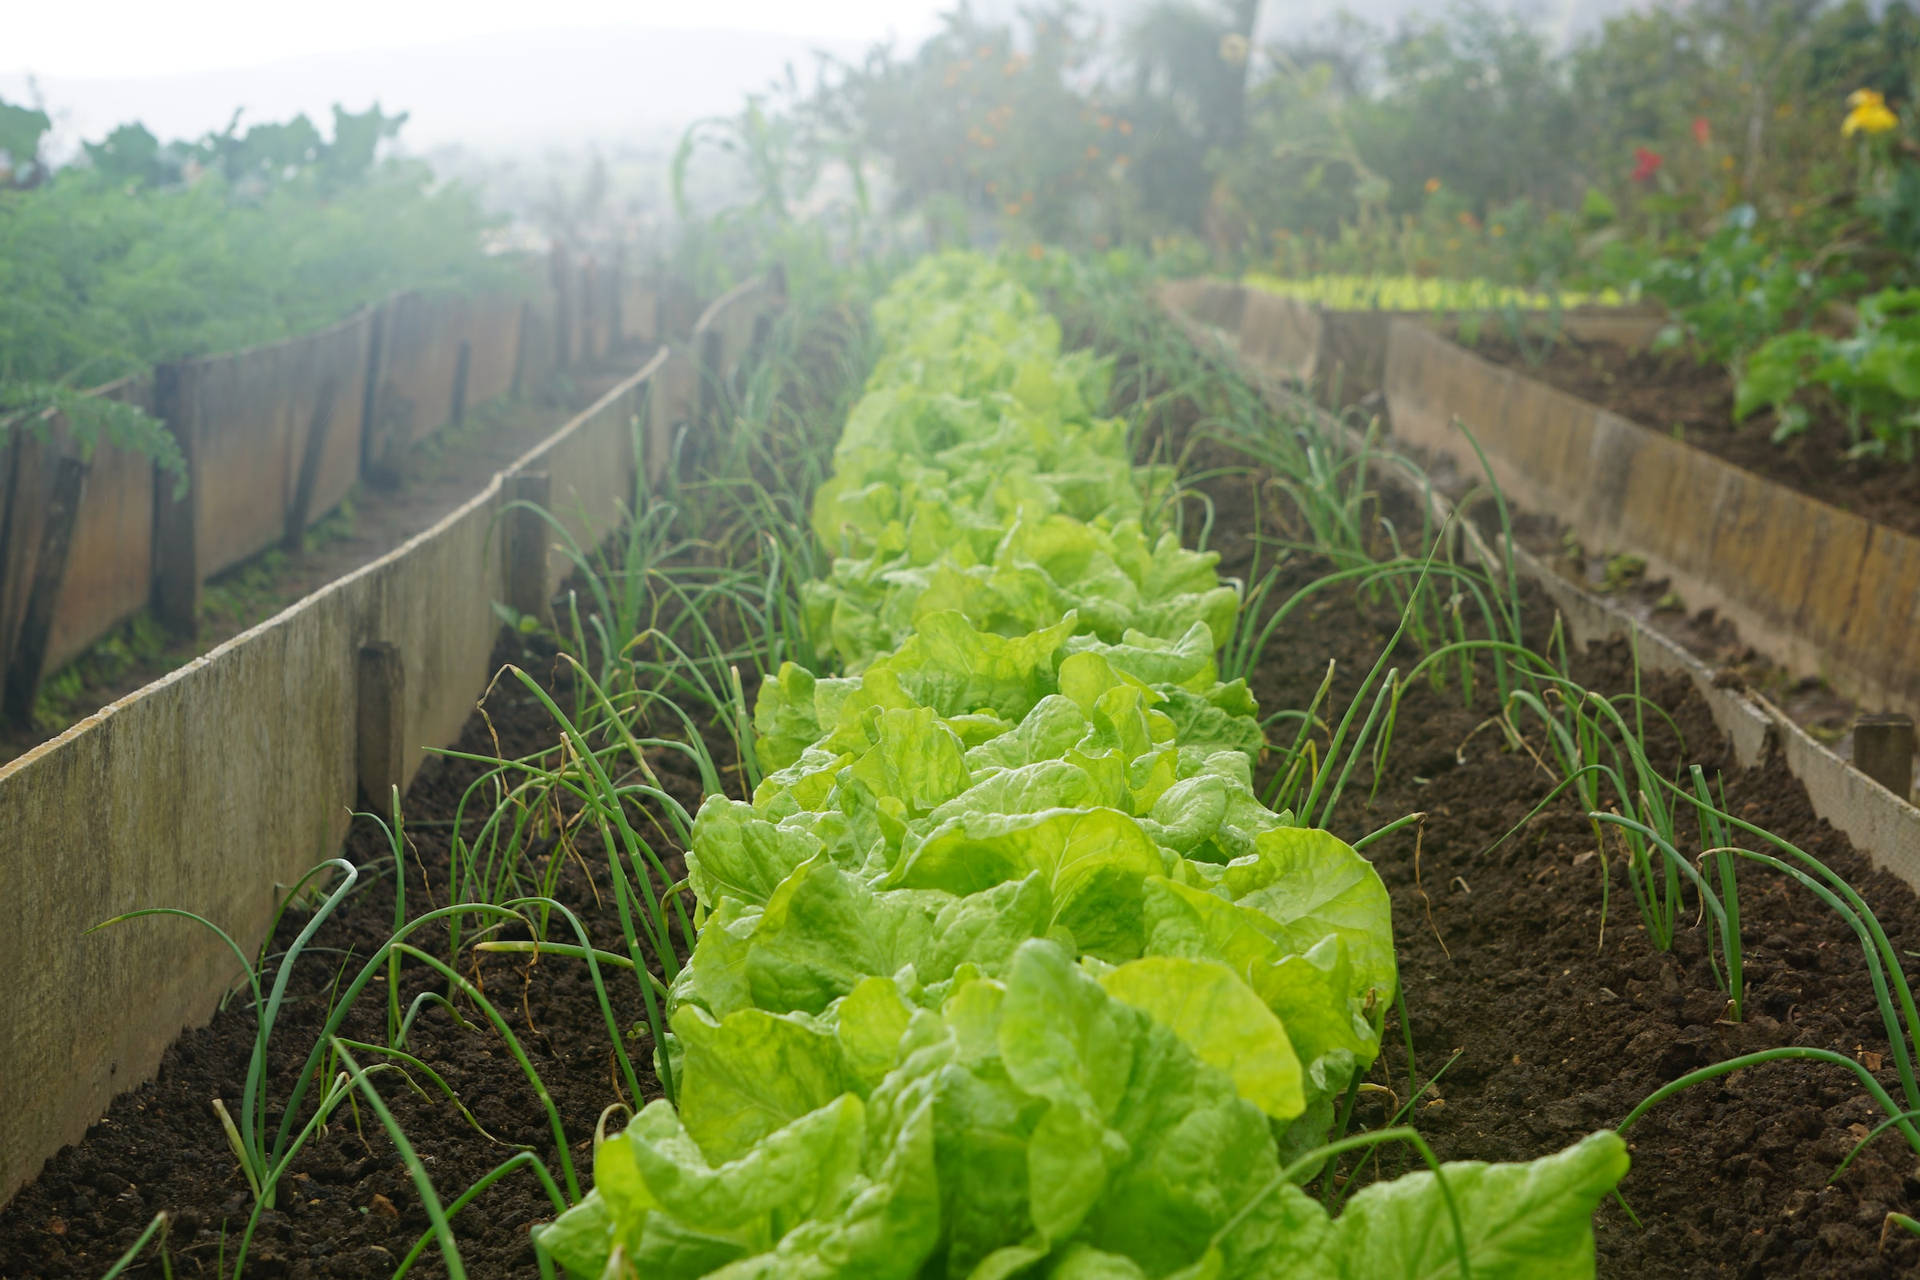 landØkologisk salat plantet sammen med løg i landbrugsjord Wallpaper